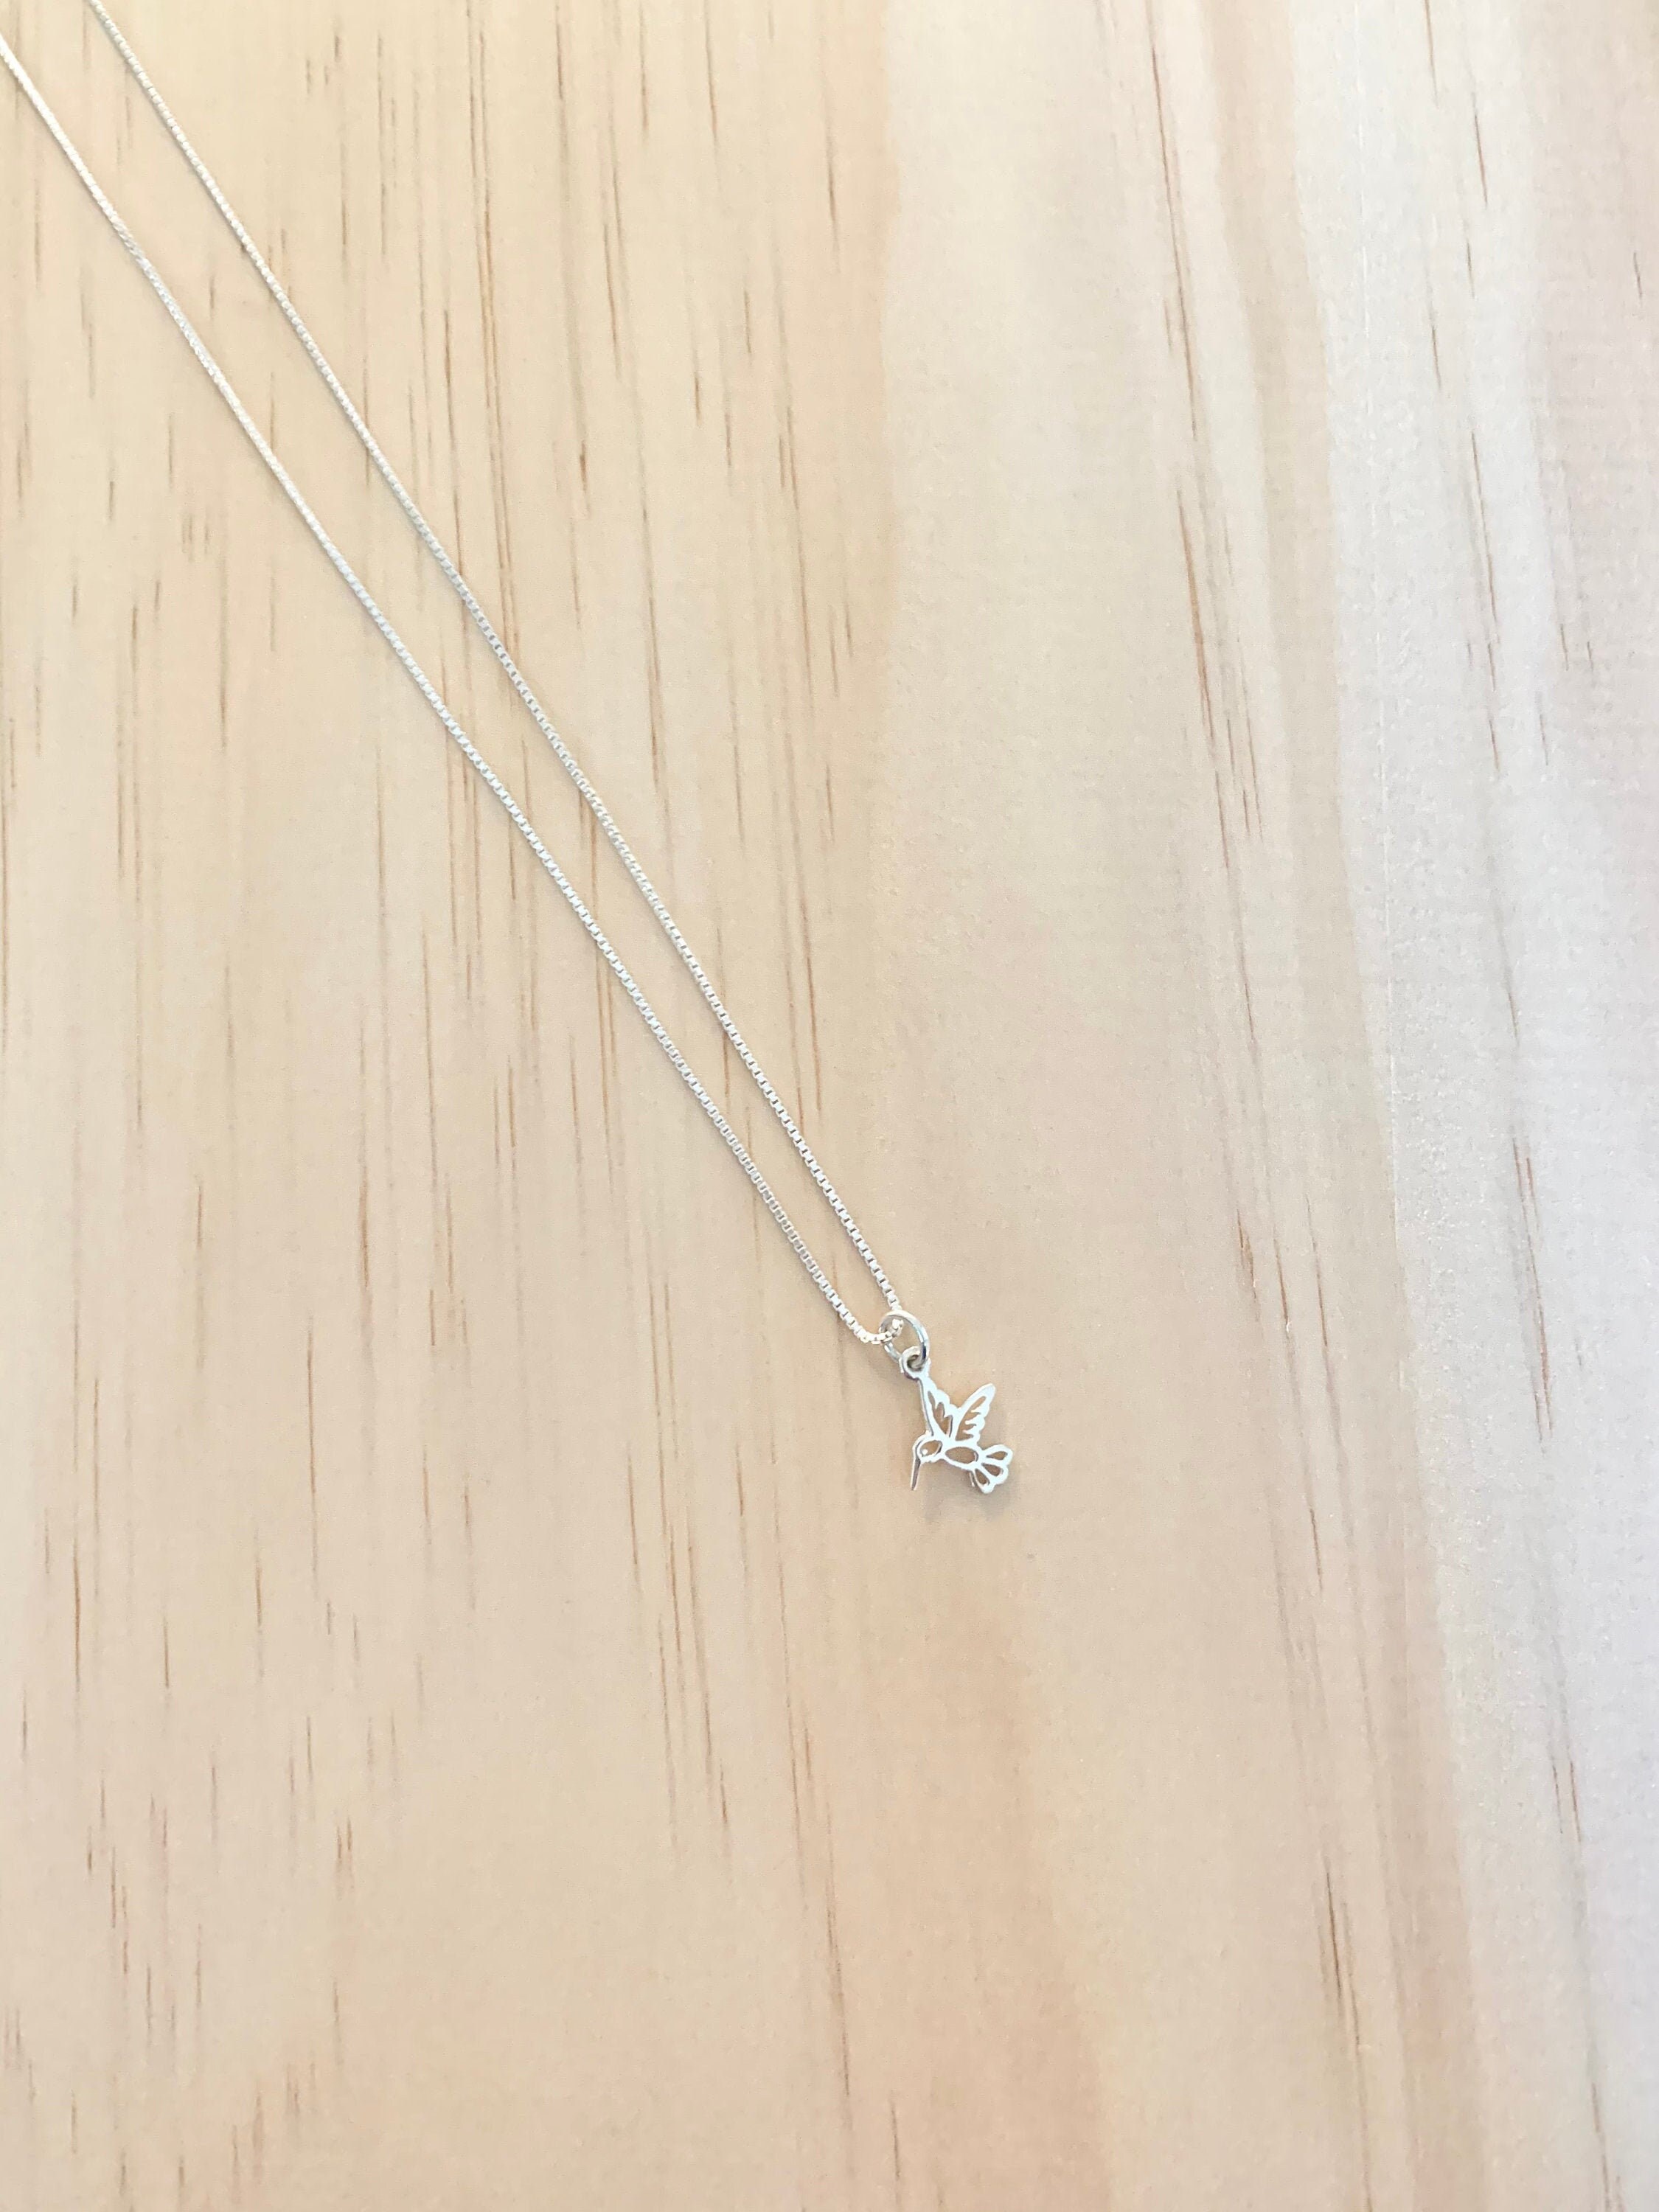 Hummingbird Charm Necklace 925 Sterling Silver Gossamer 1mm | Etsy